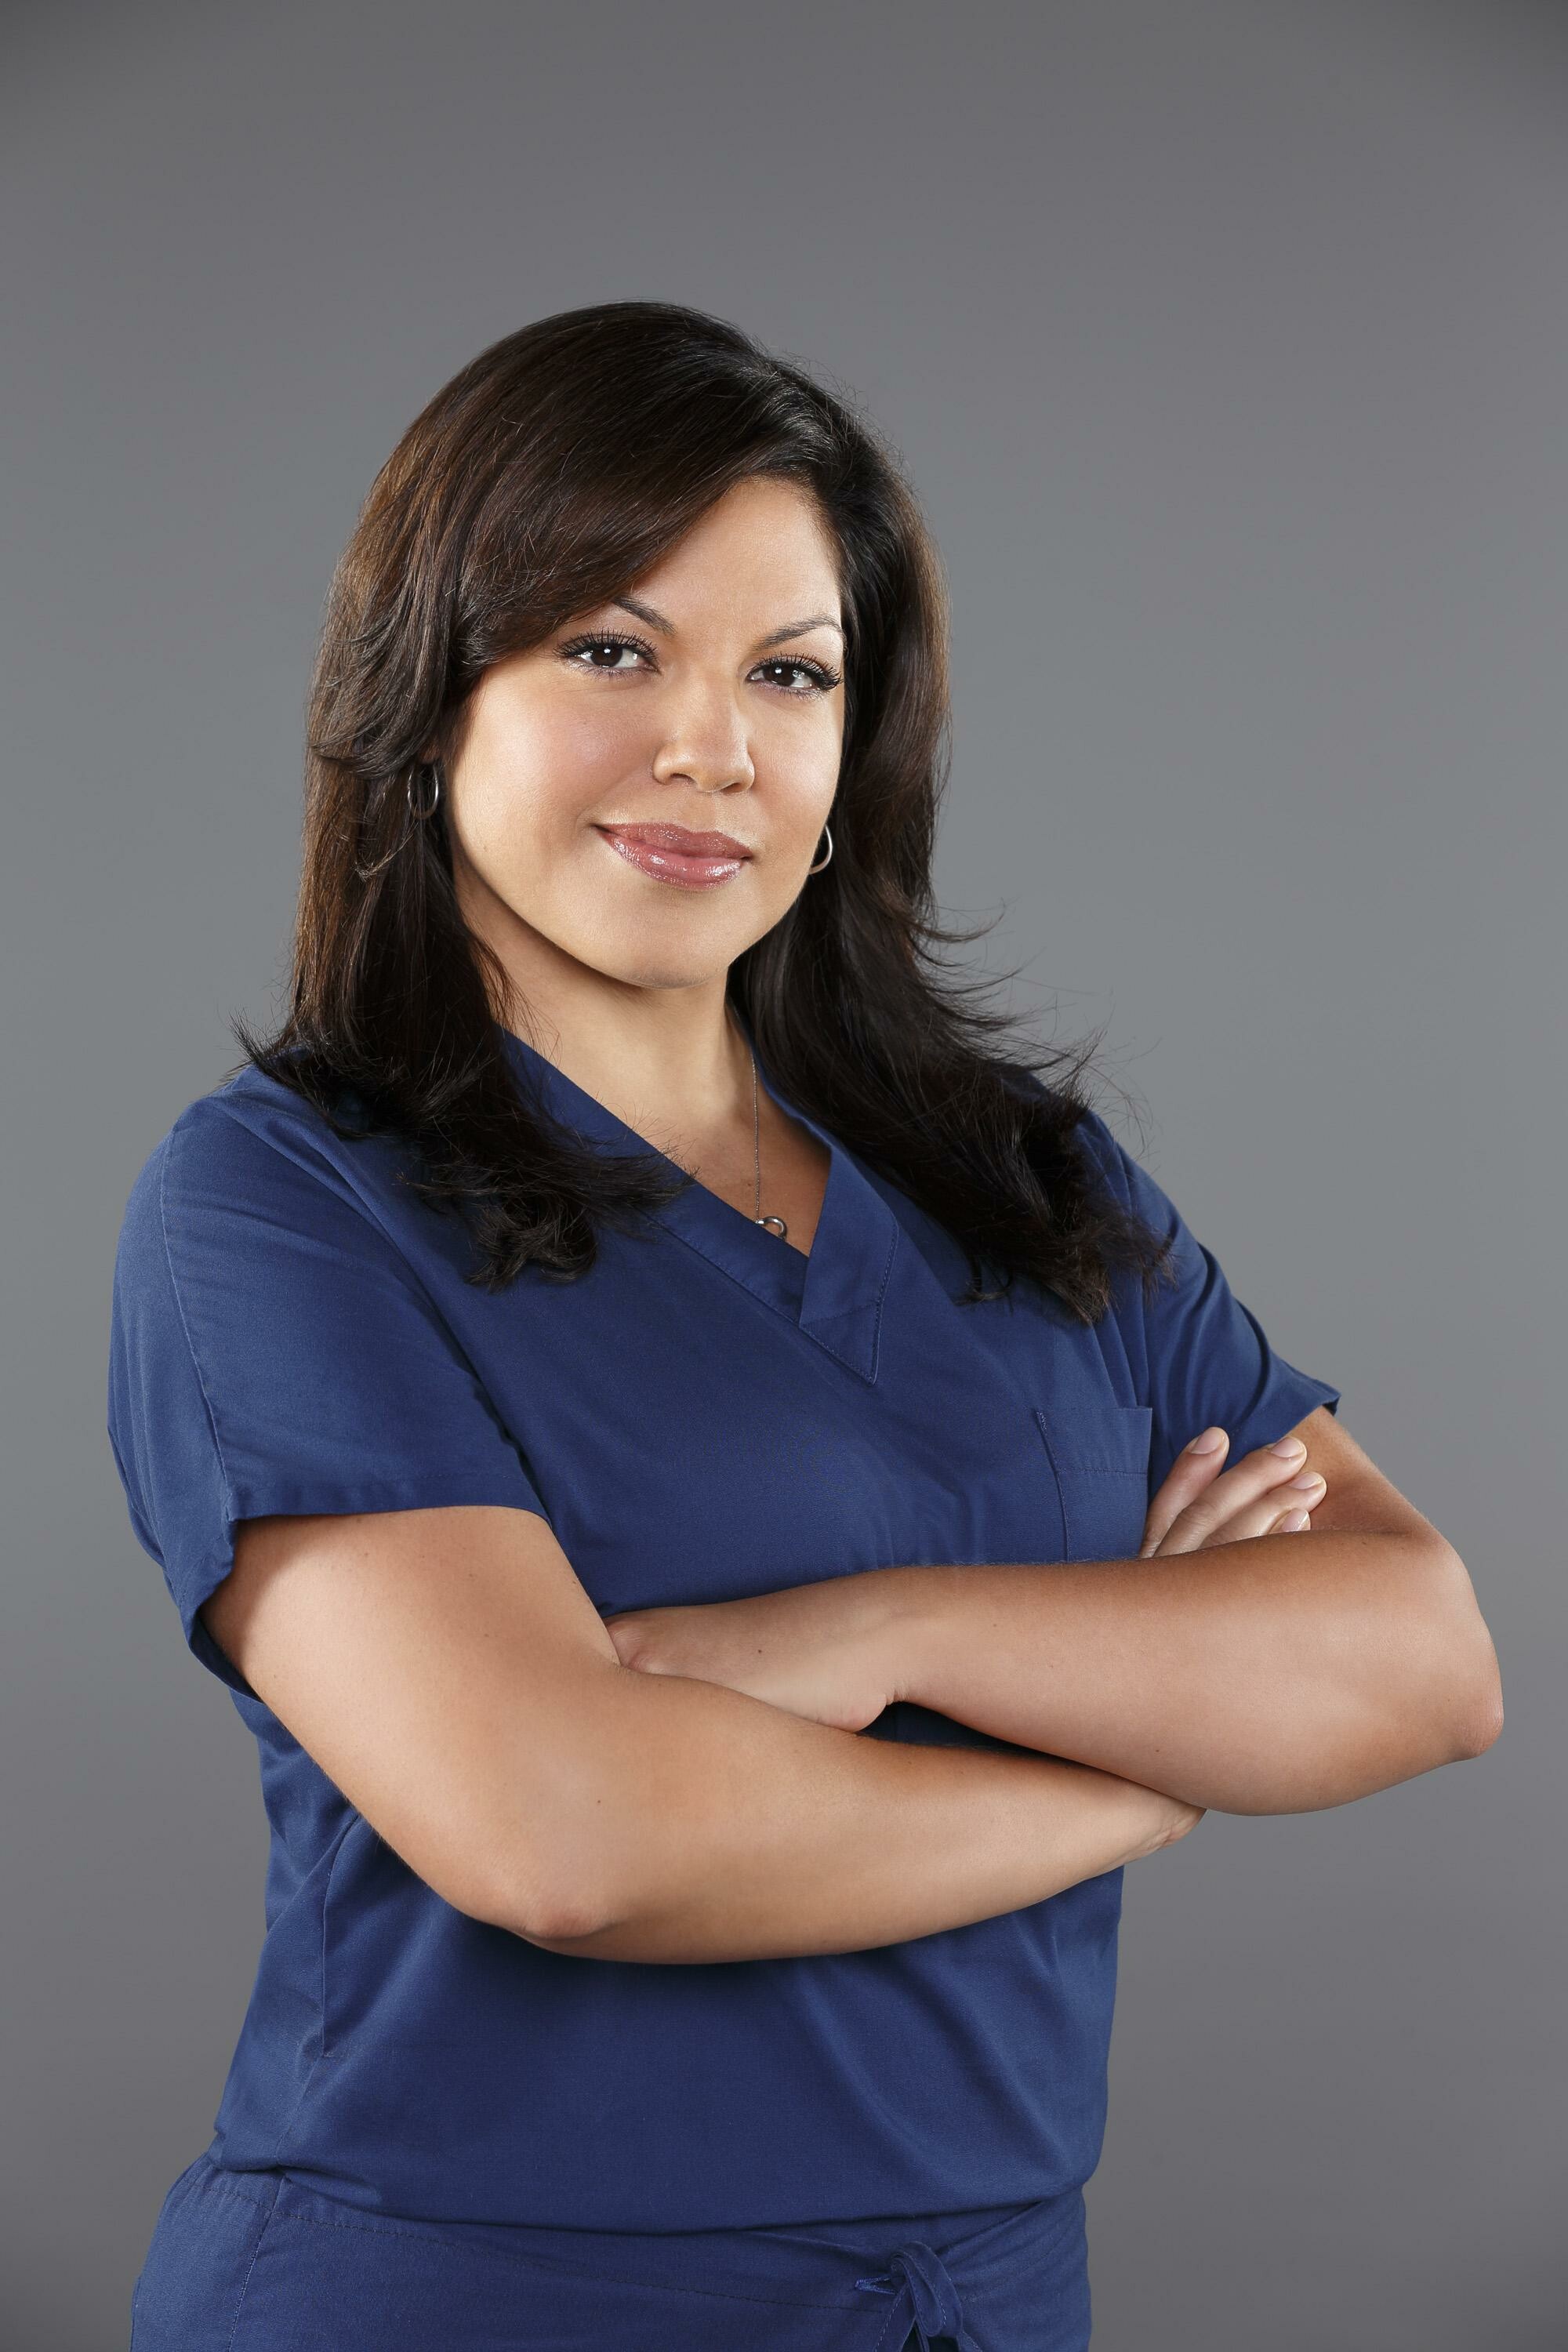 Sara Ramirez: Played Callie Torres in the medical drama television series Grey's Anatomy. 2000x3000 HD Wallpaper.